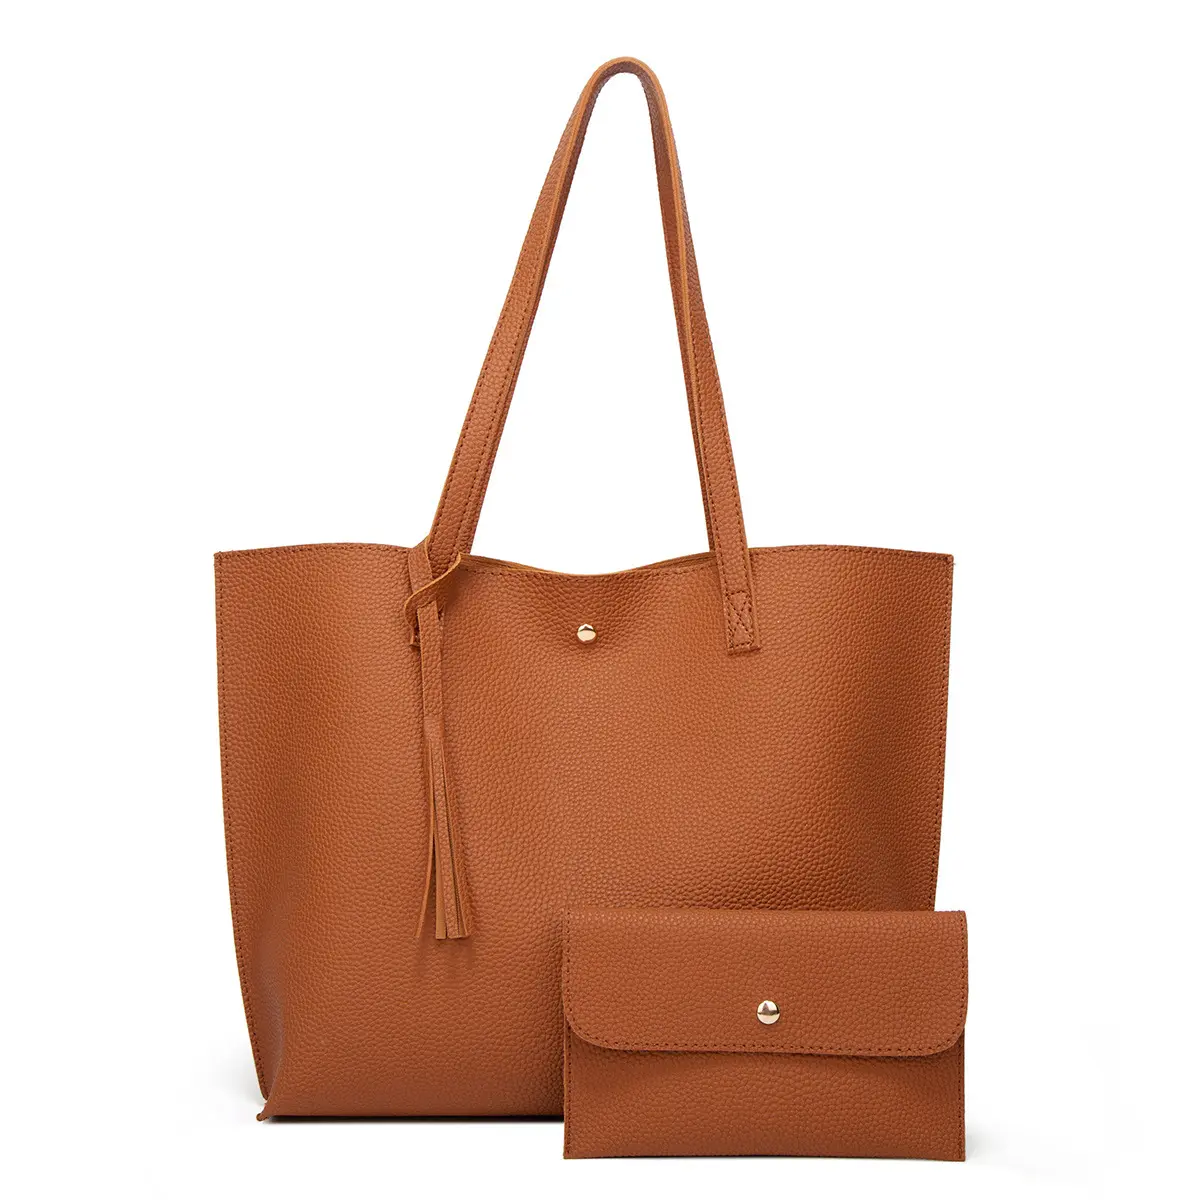 Wholesale PU large capacity shoulder bag, Famous brand fashion designer purse and handbag for women tassels tote bag wallet